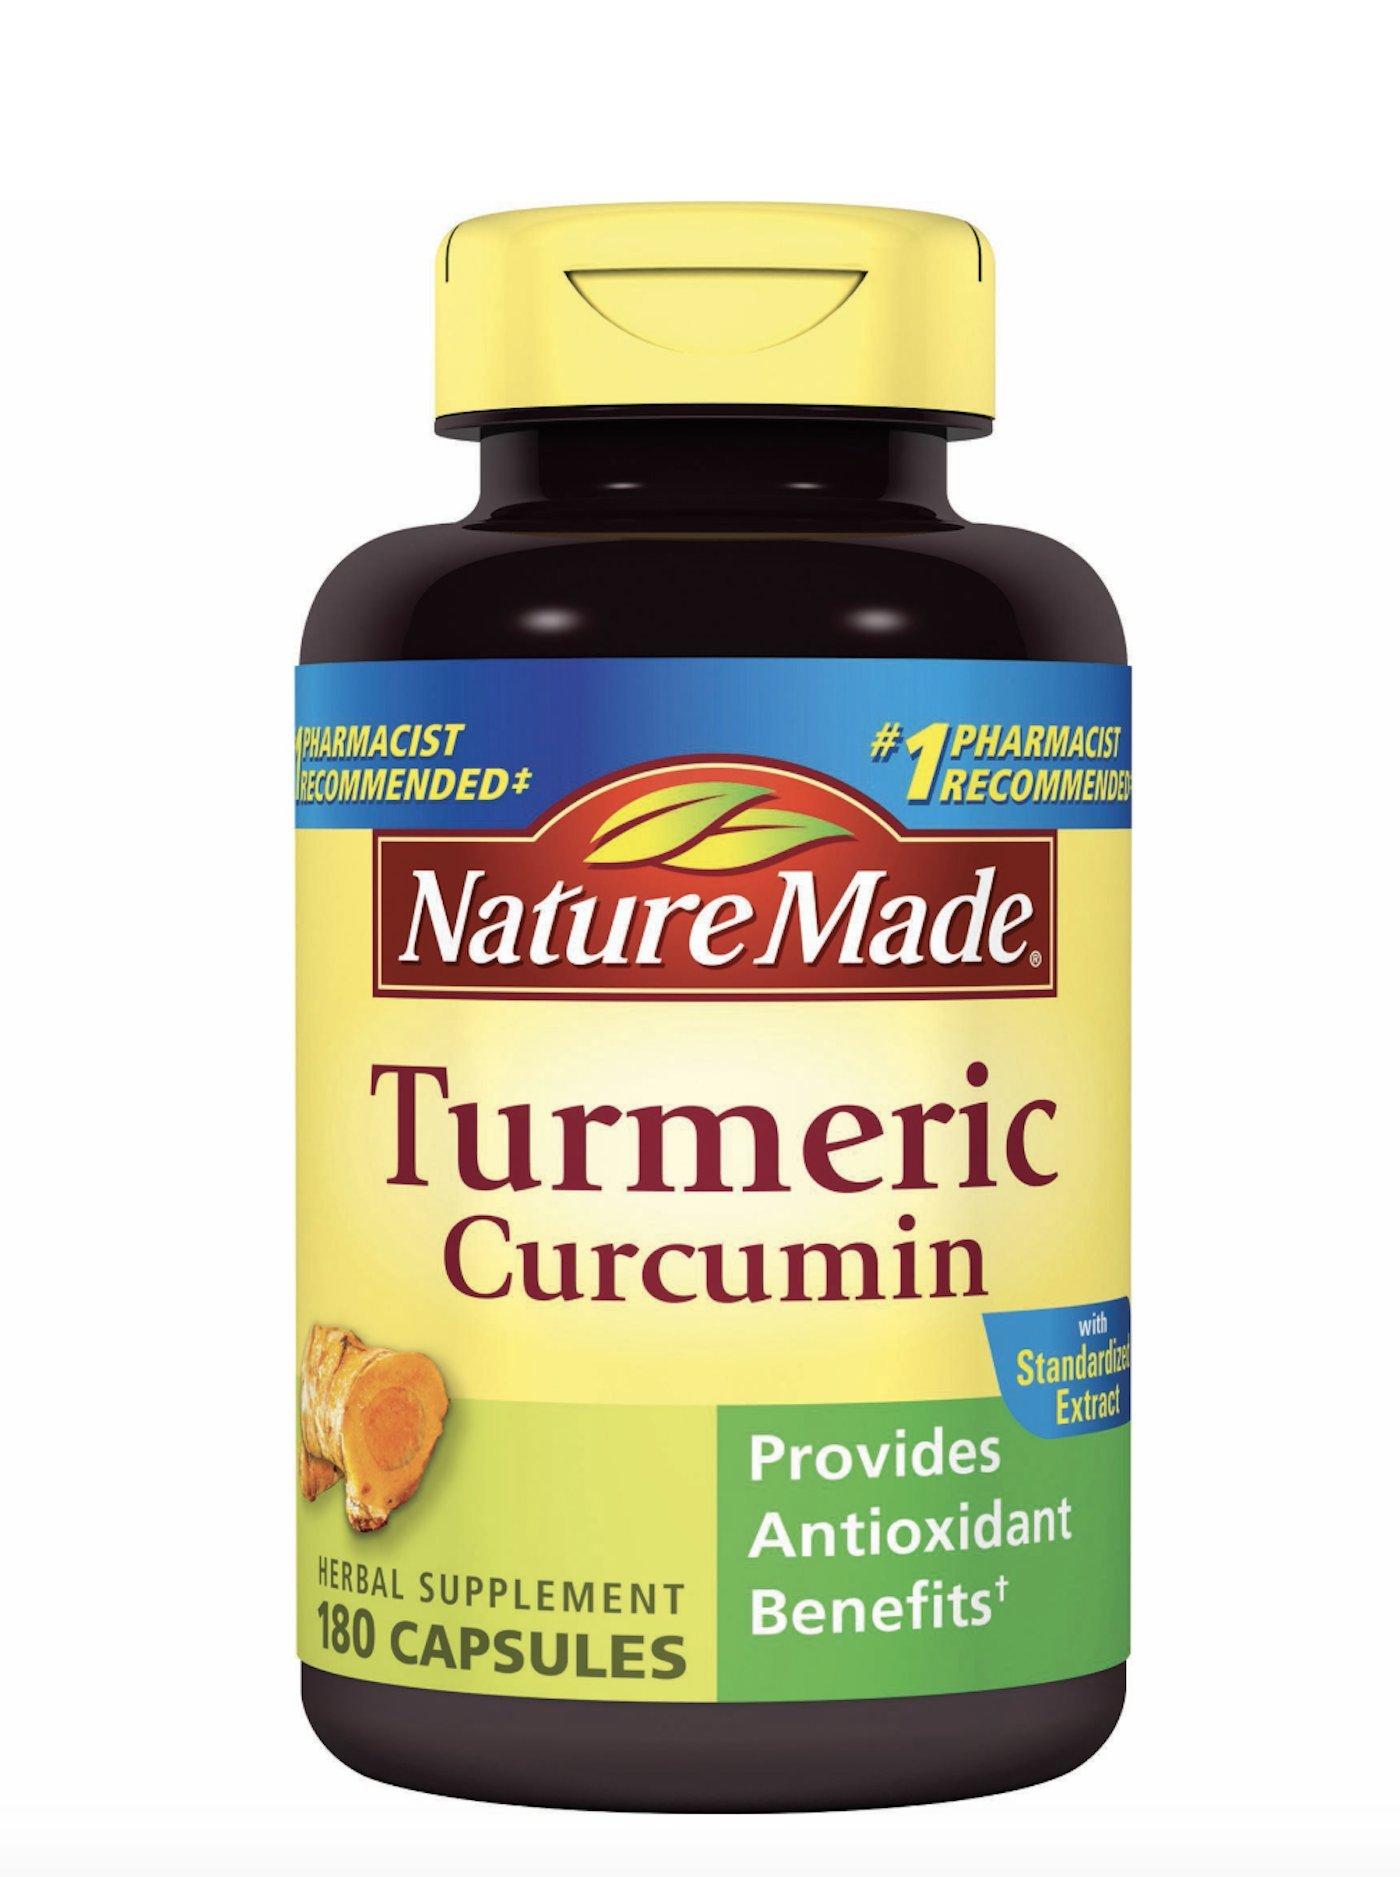 Nature Made Turmeric Curcumin 500 Milligram Capsules Antioxidant